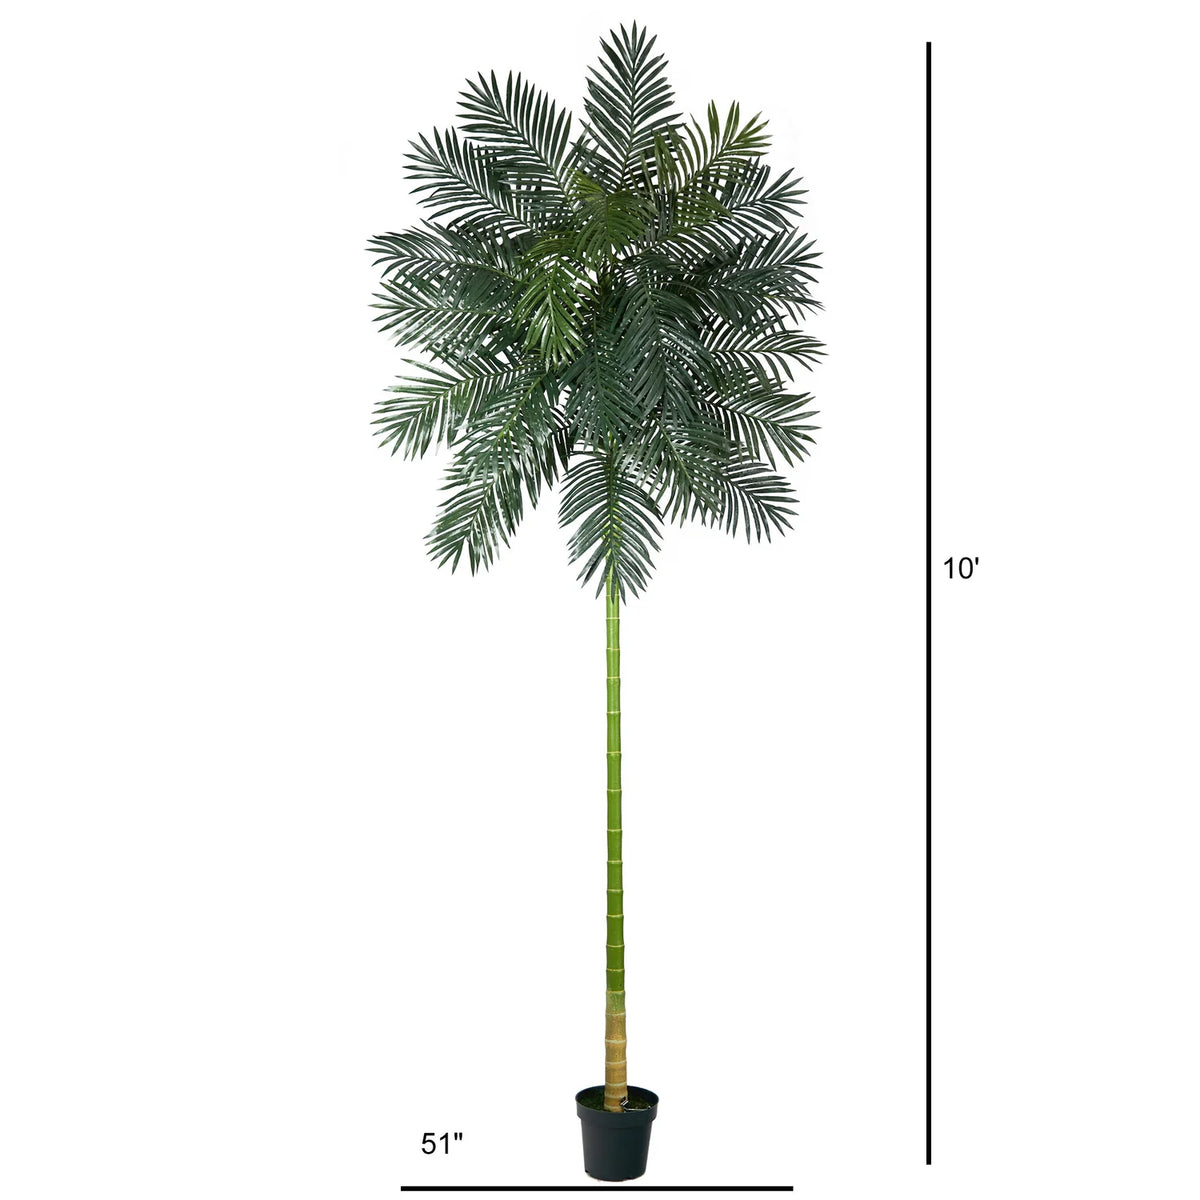 Vickerman 7' LED Rope Light Palm Tree by Vickerman - 3